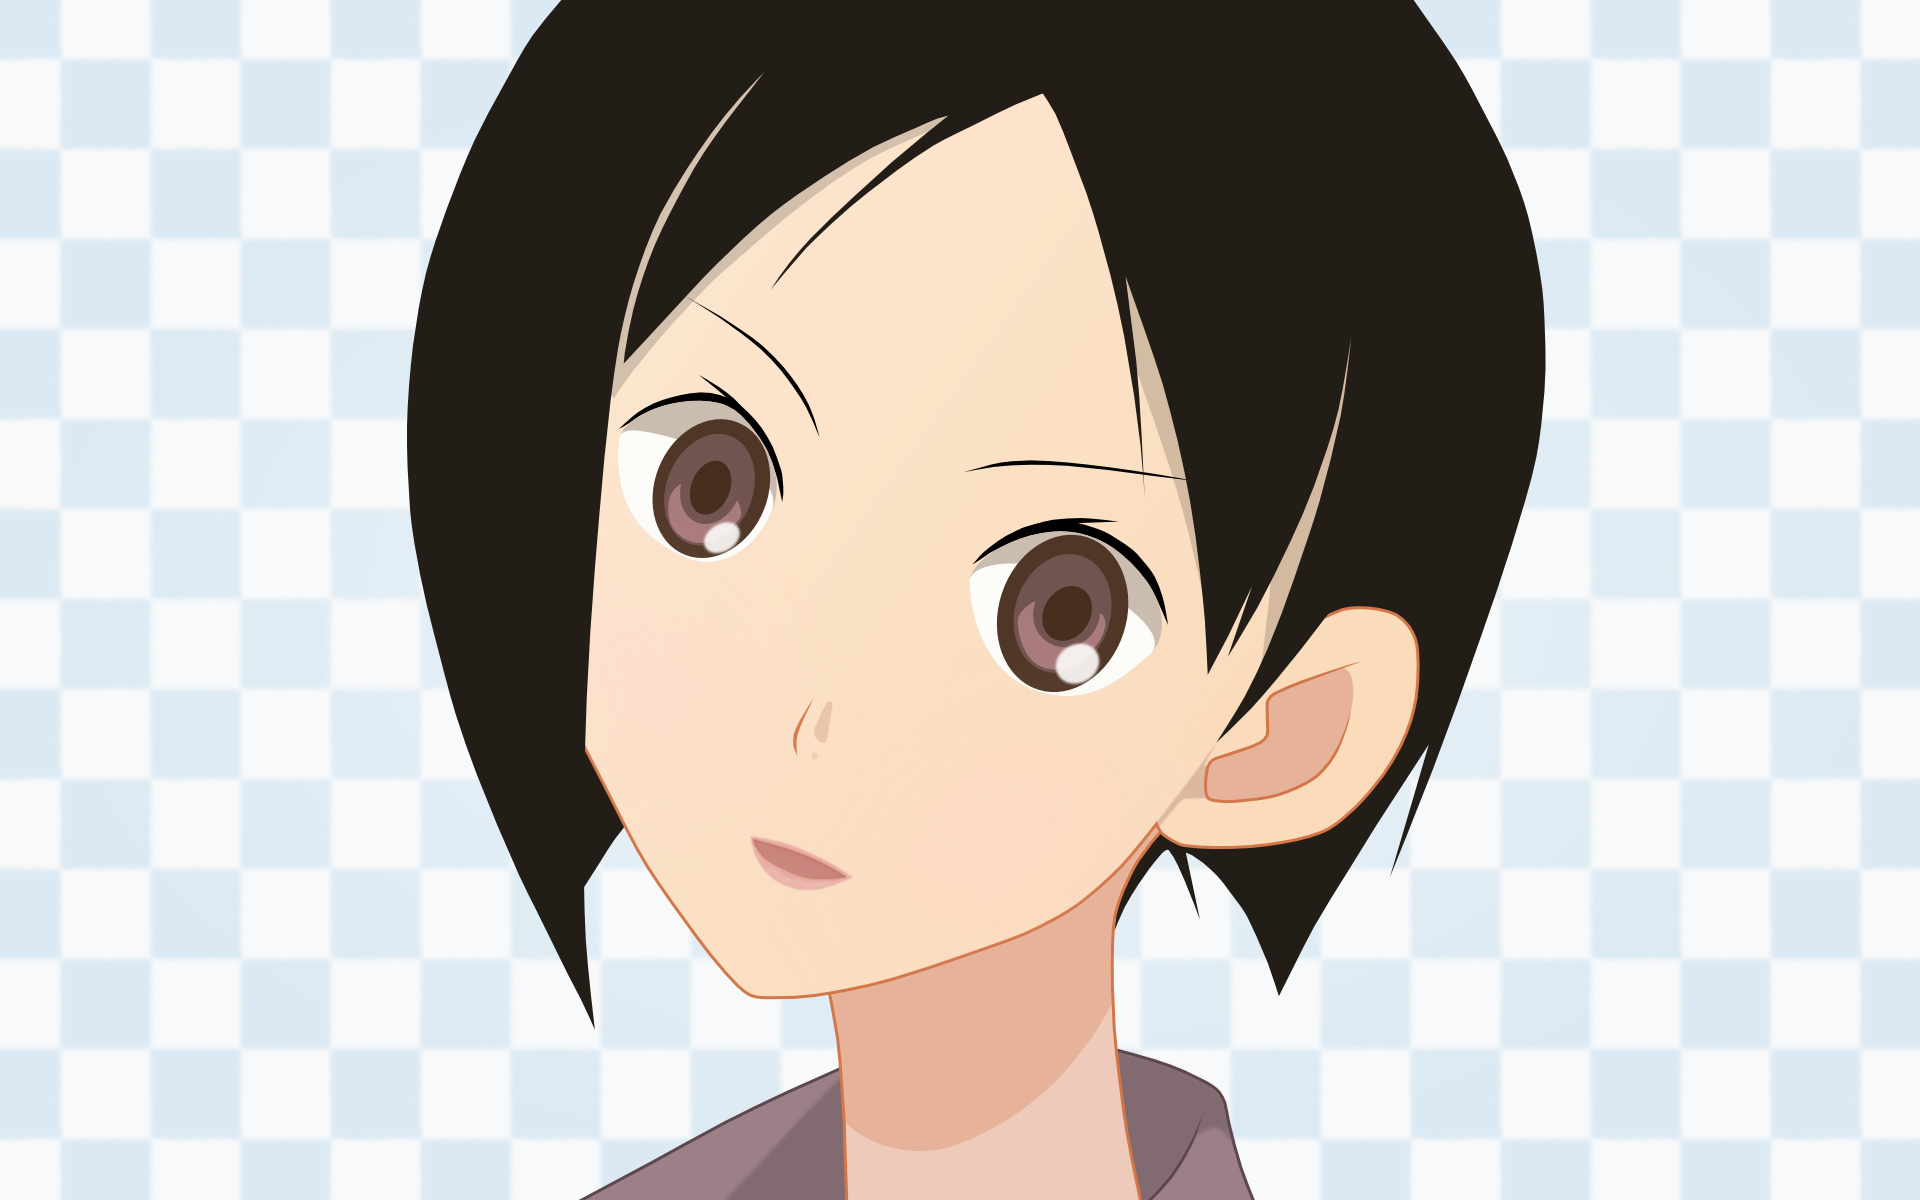 Chie Arai Anime character from Sayonara Zetsubou-Sensei with a desktop wallpaper.